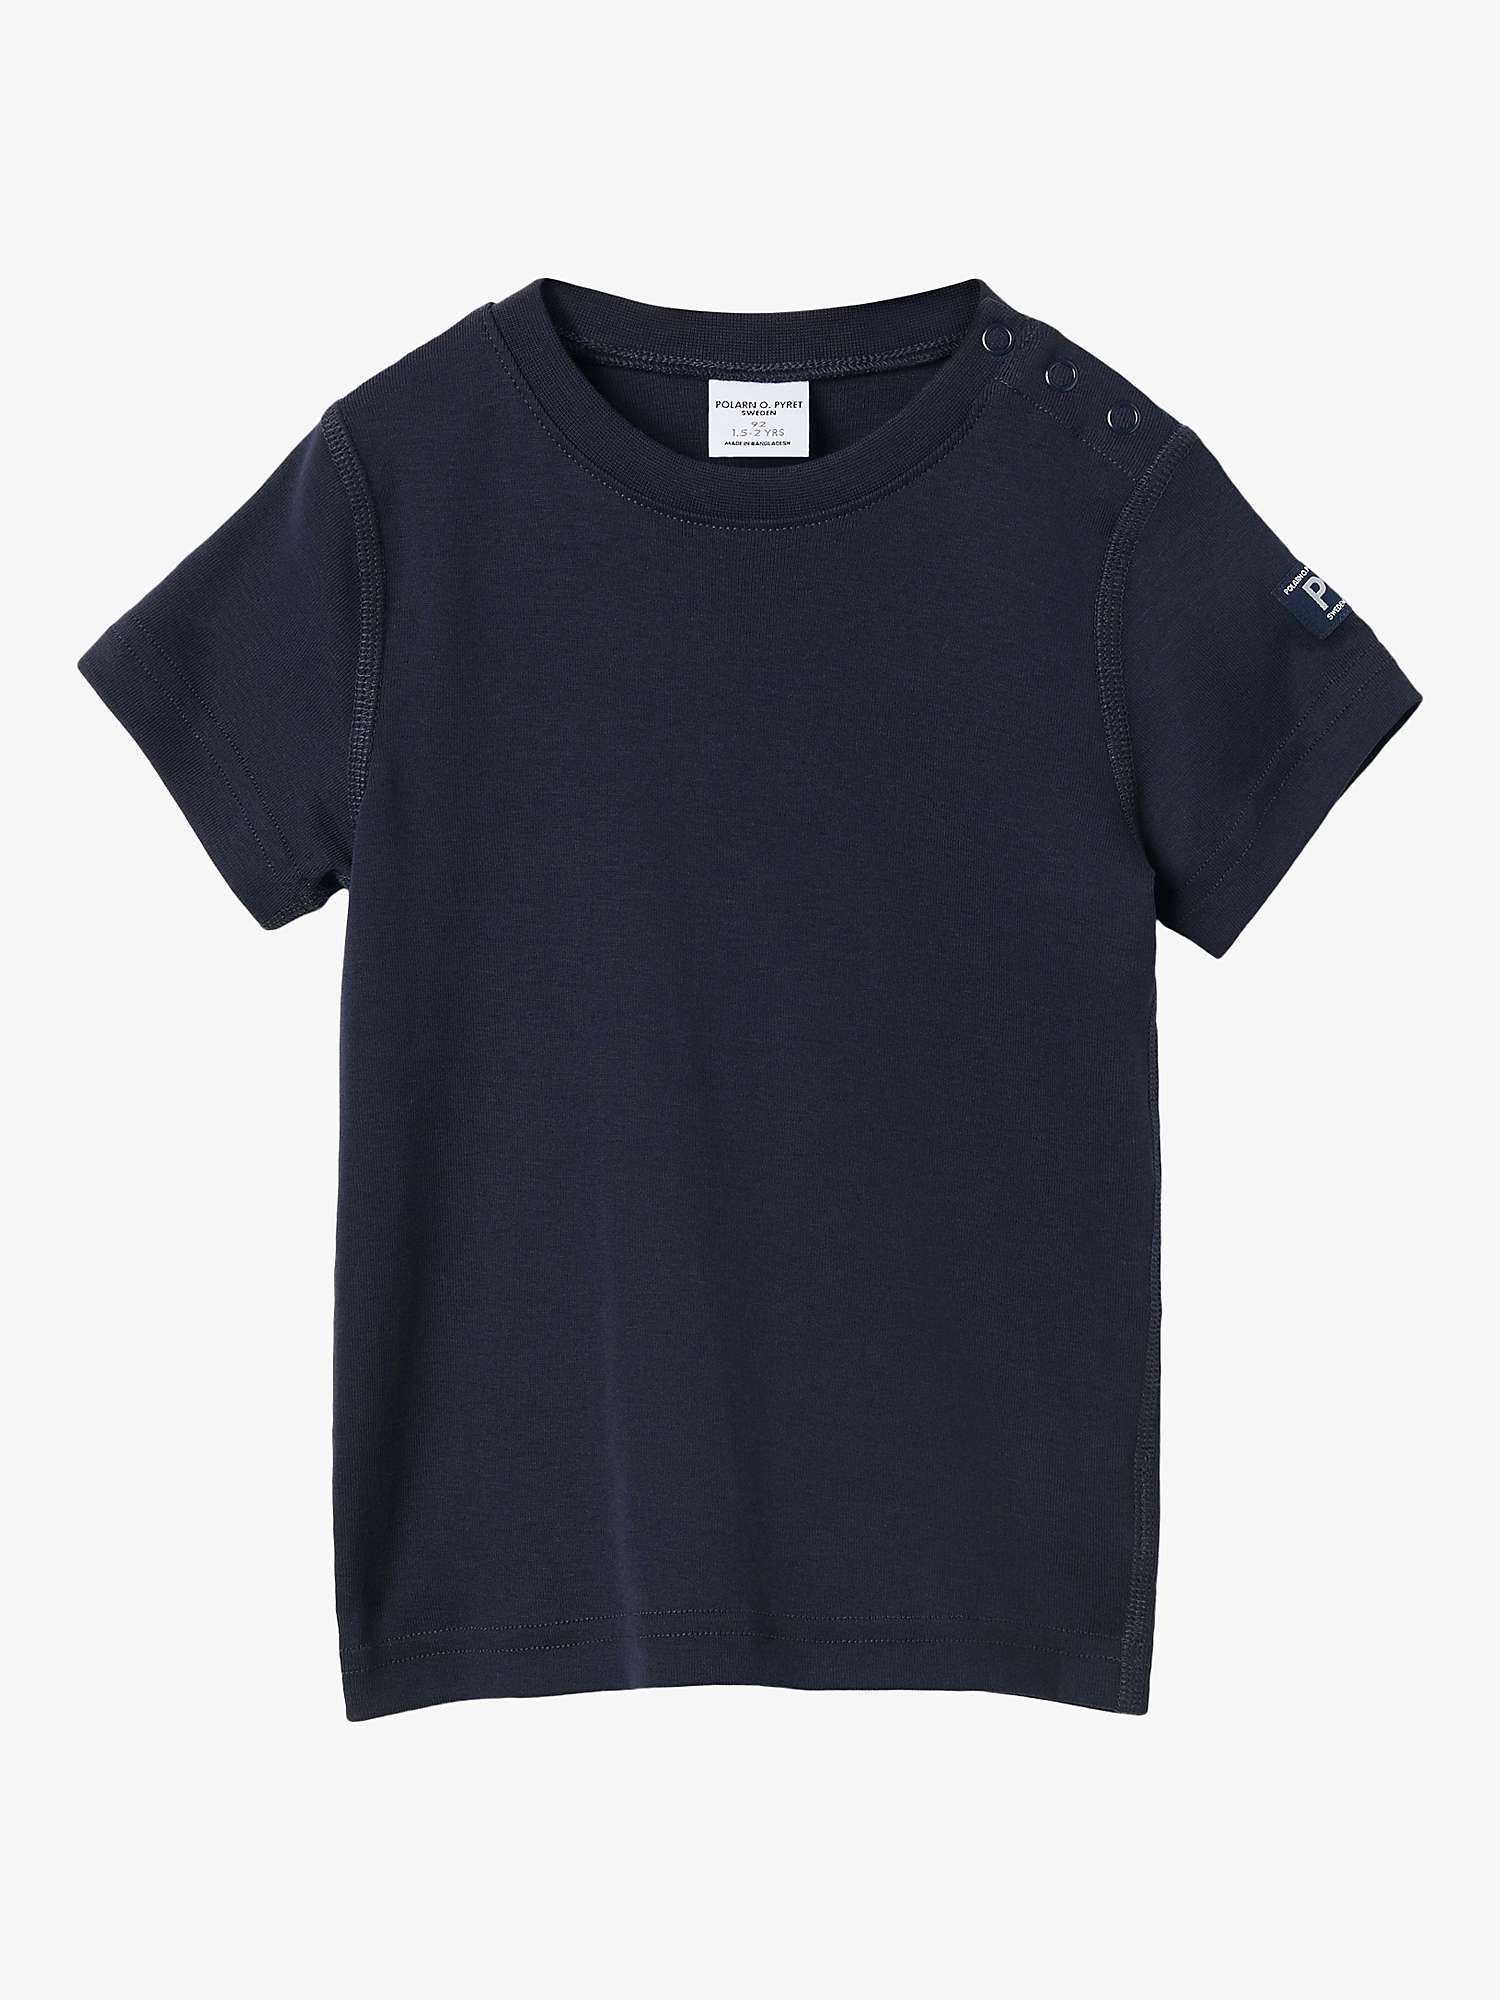 Buy Polarn O. Pyret Kids' Organic Cotton Short Sleeve T-Shirt Online at johnlewis.com